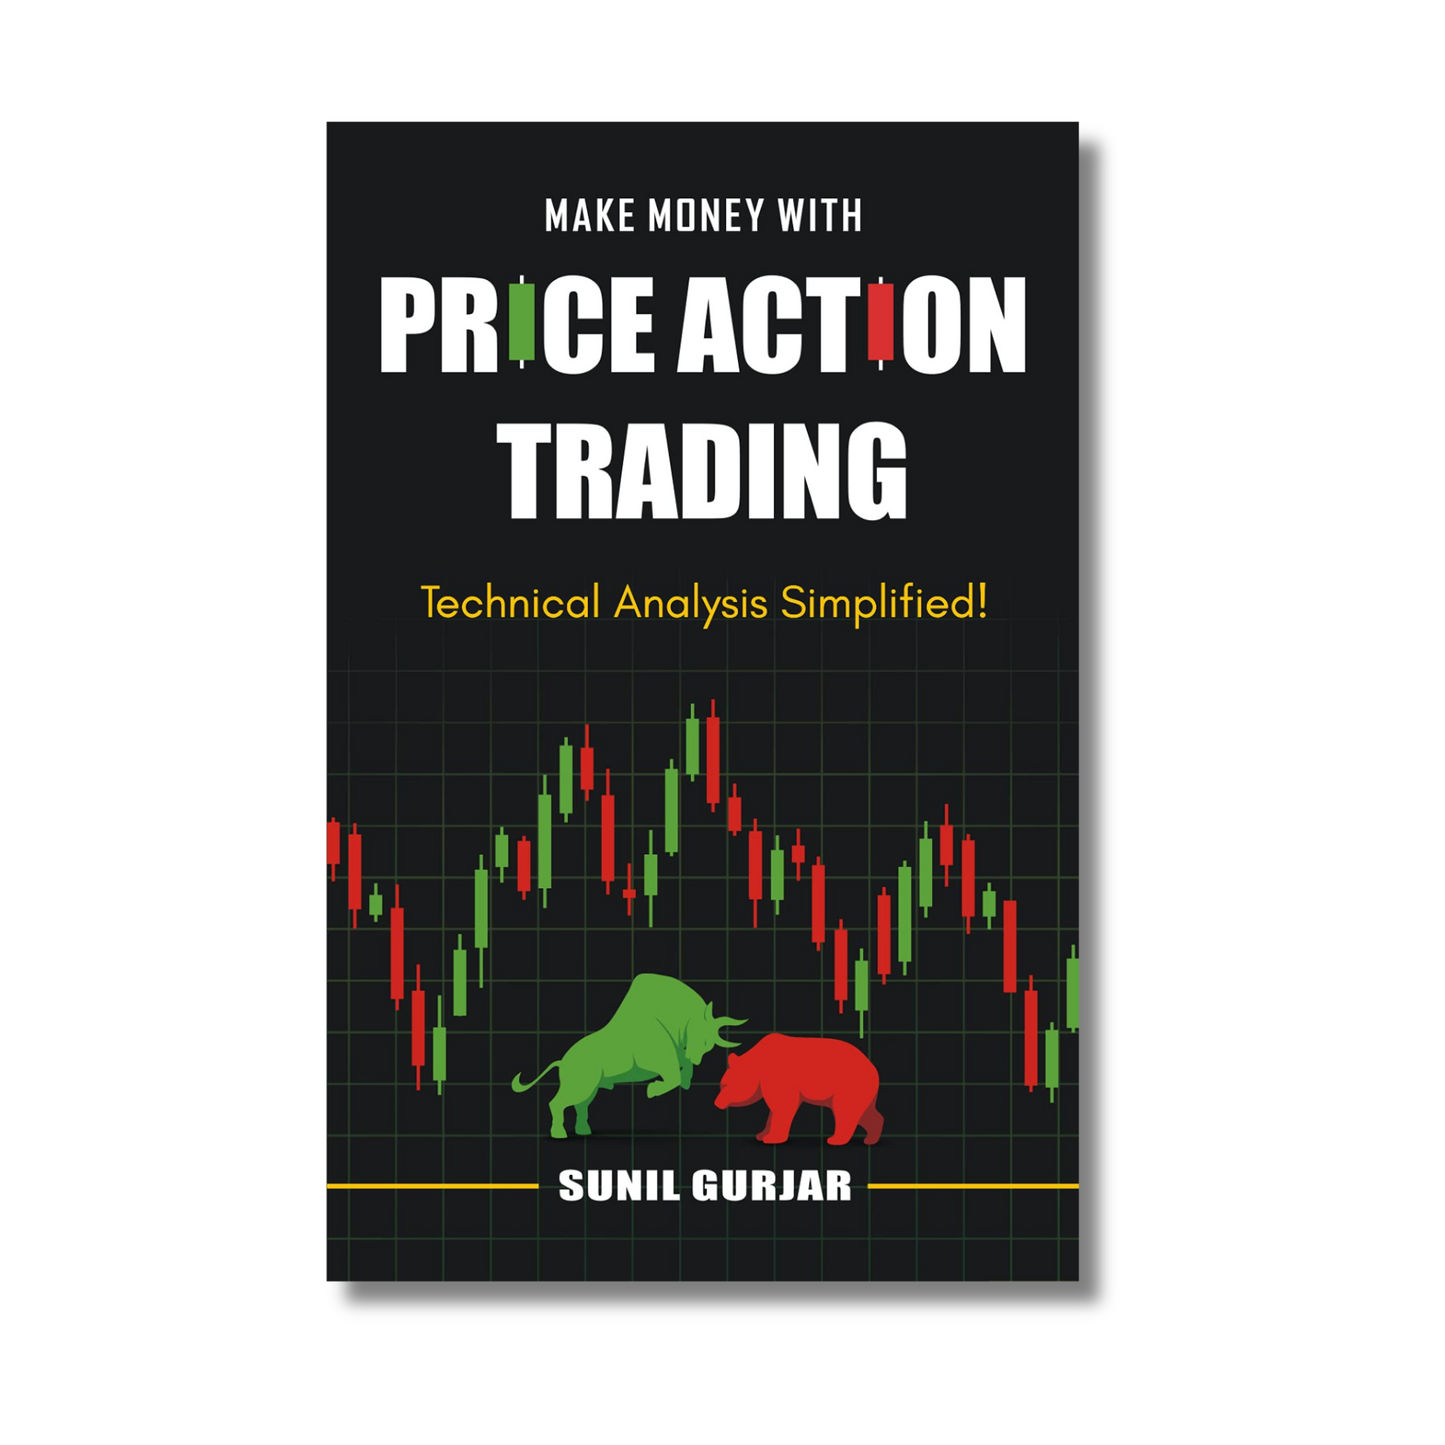 Price Action Trading By Sunil Gurjar (Paperback)